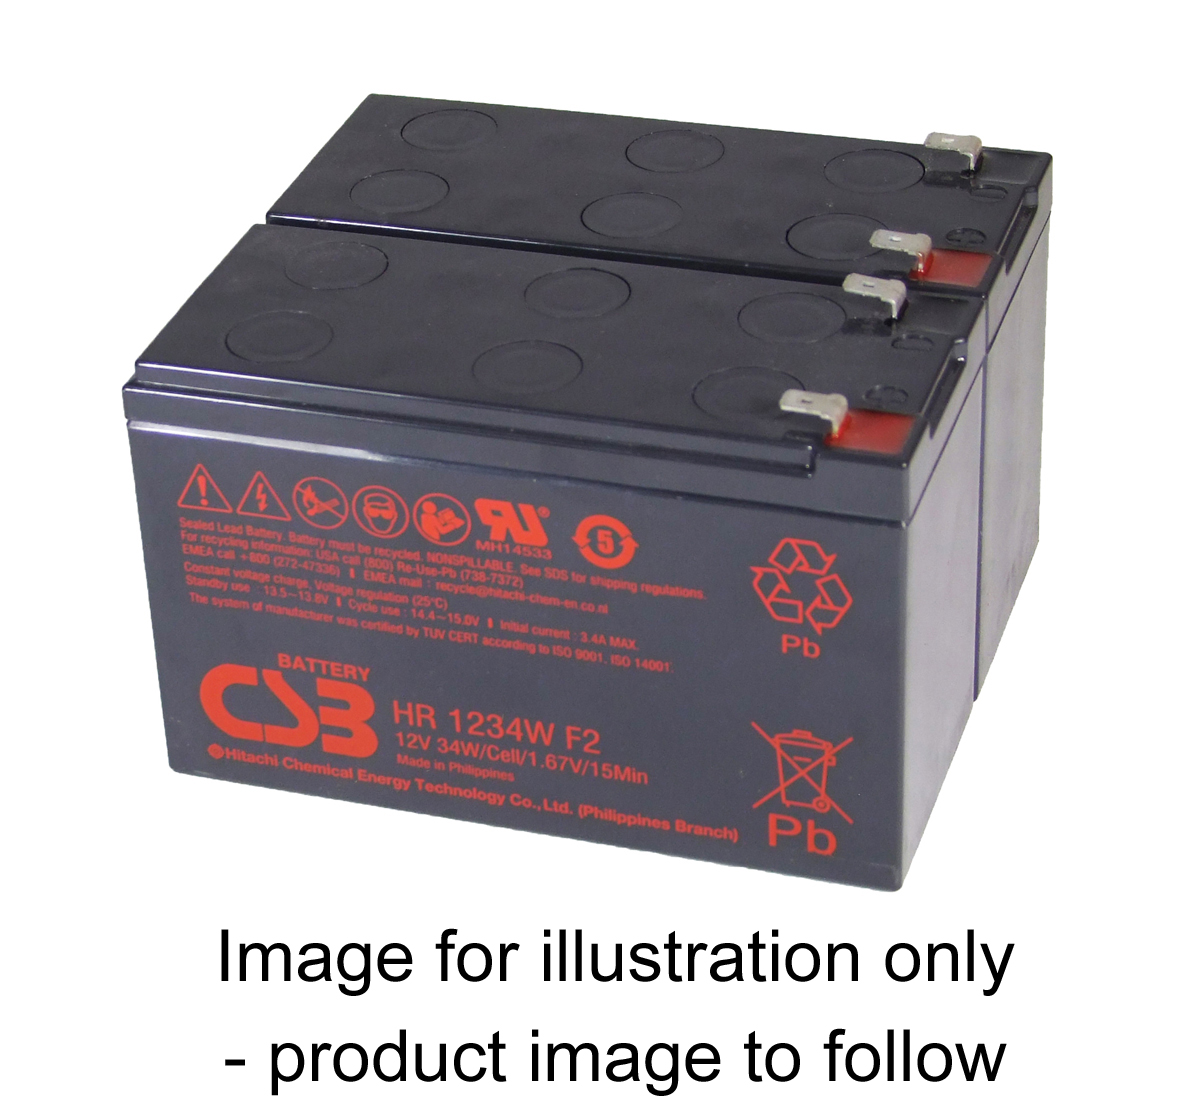 MDSV203 UPS Battery Kit - Replaces APC RBCV203